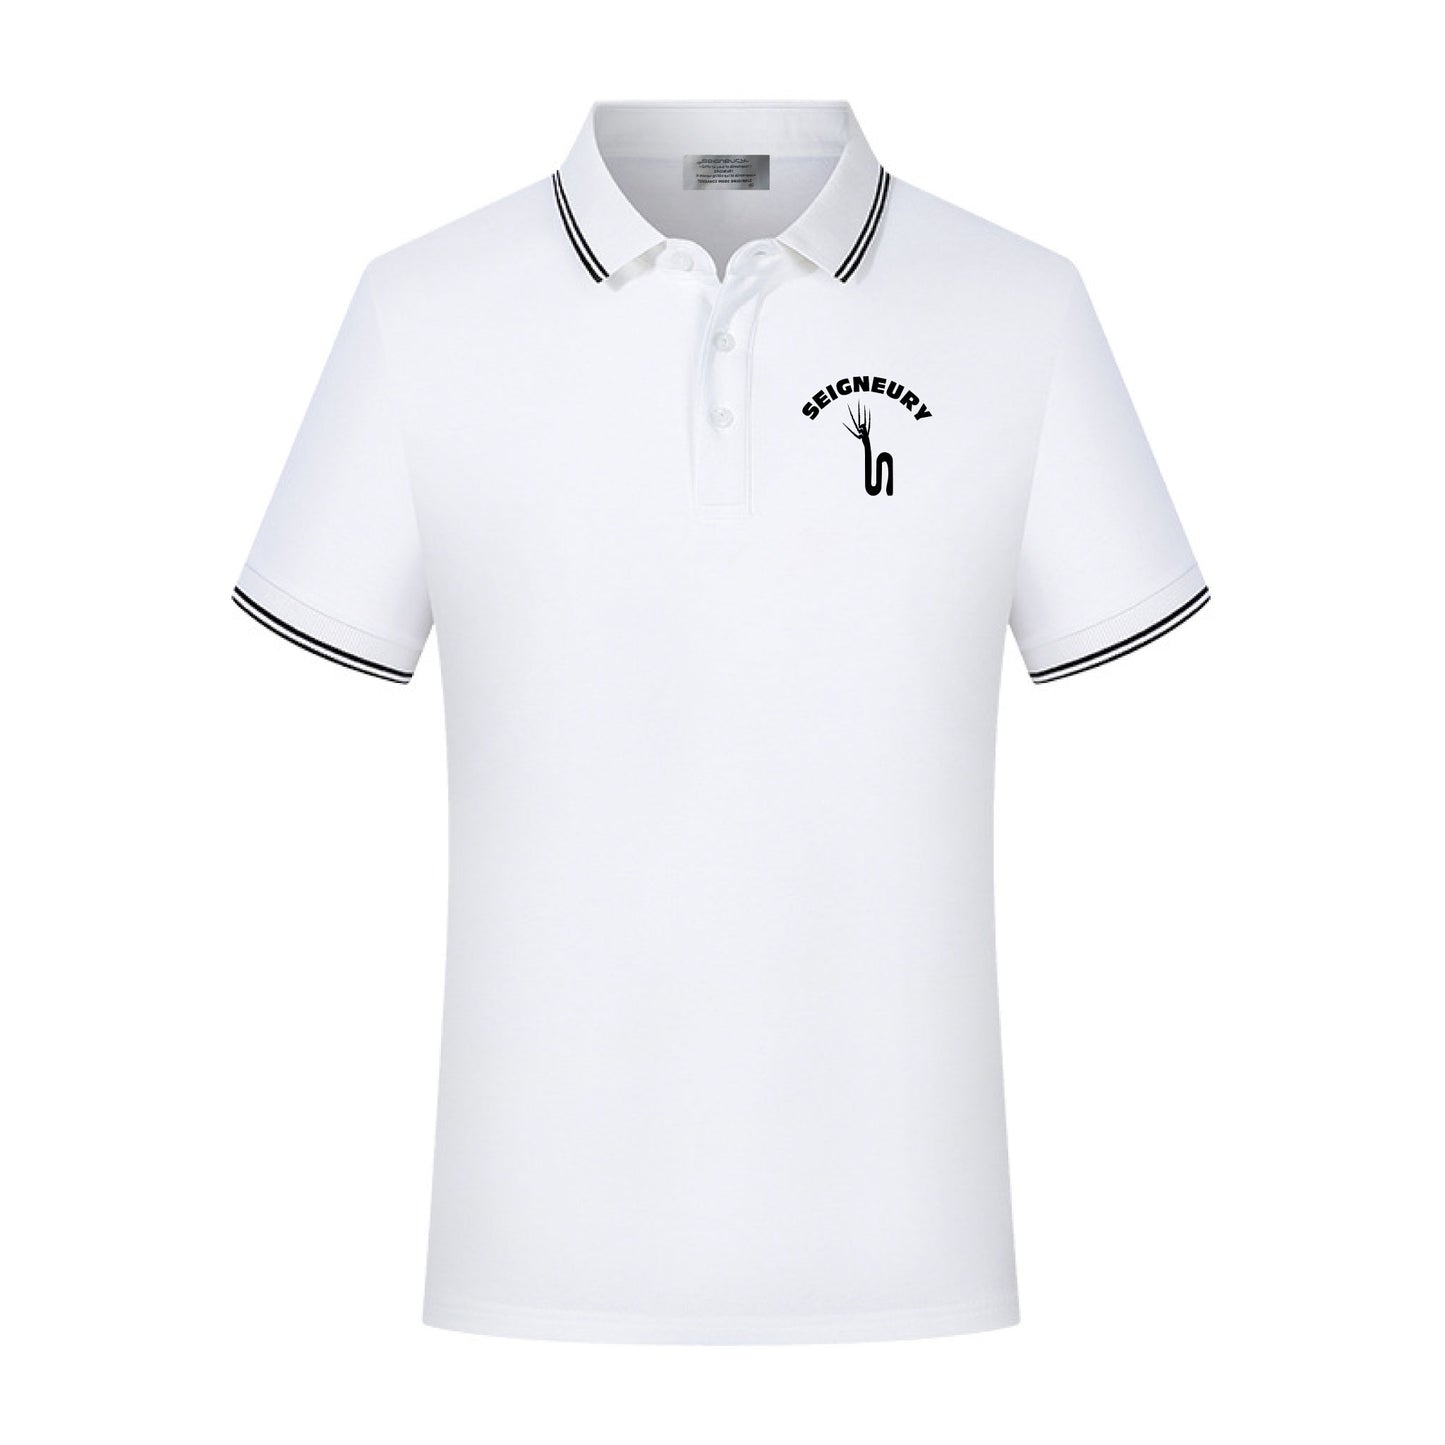 Polo Golf UNISEX Respirant Cotton Haute Qualité Logo Broder Gamme Or